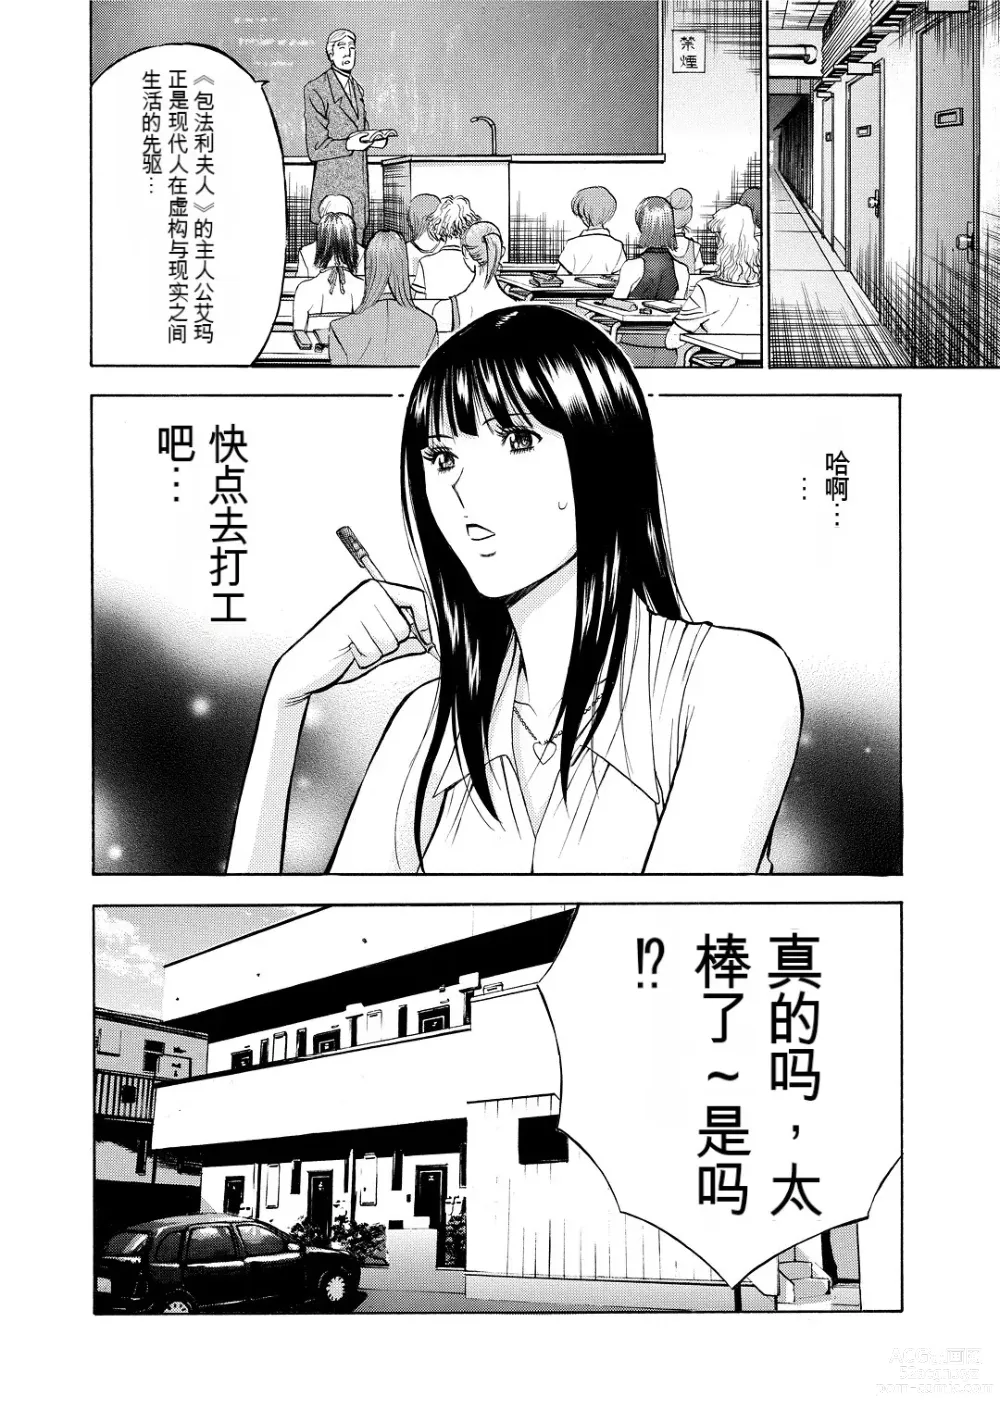 Page 10 of manga Gucchun Hikkoshitai